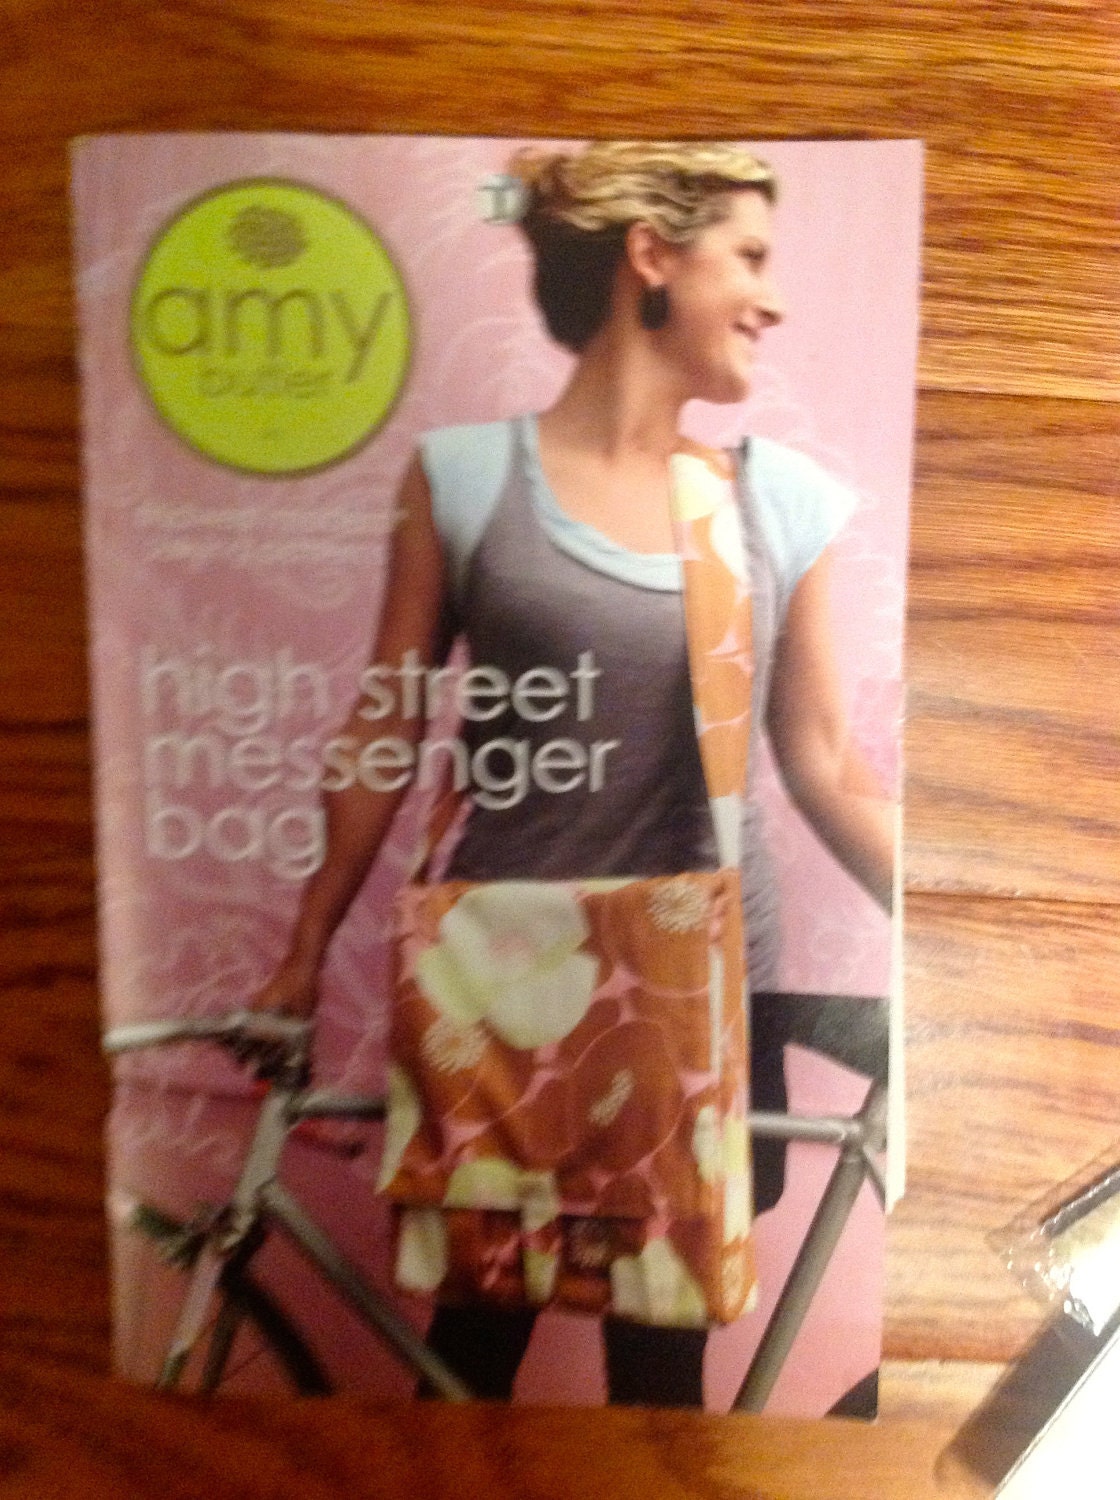 ... Amy Butler high street messenger bag Midwest modern sewing patterns on